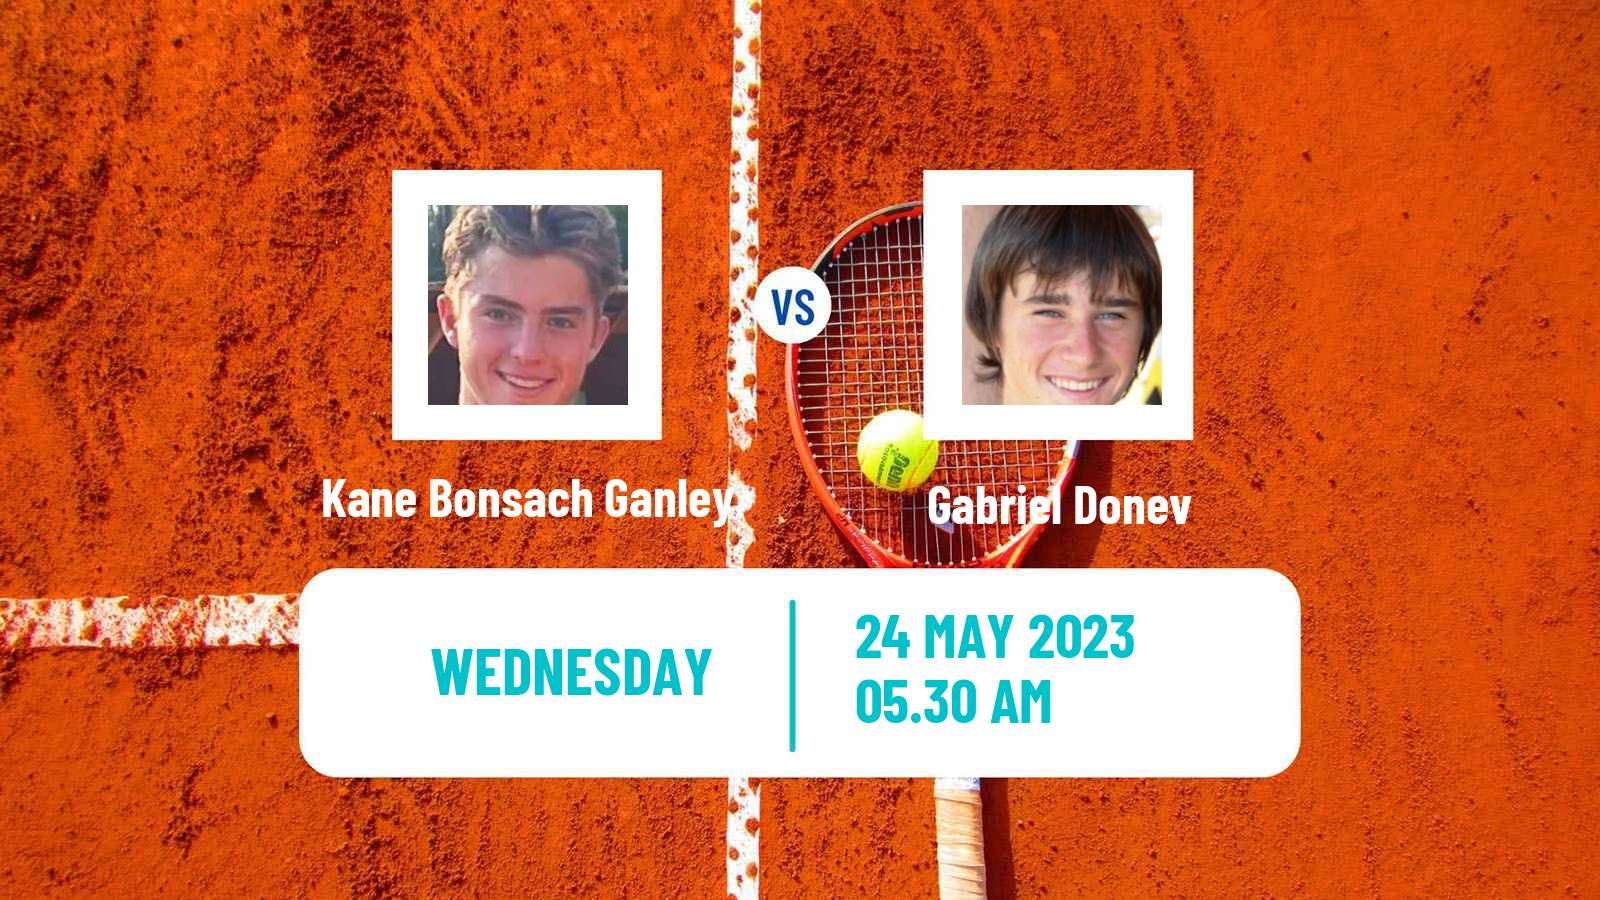 Tennis ITF M15 Pazardzhik 2 Men Kane Bonsach Ganley - Gabriel Donev